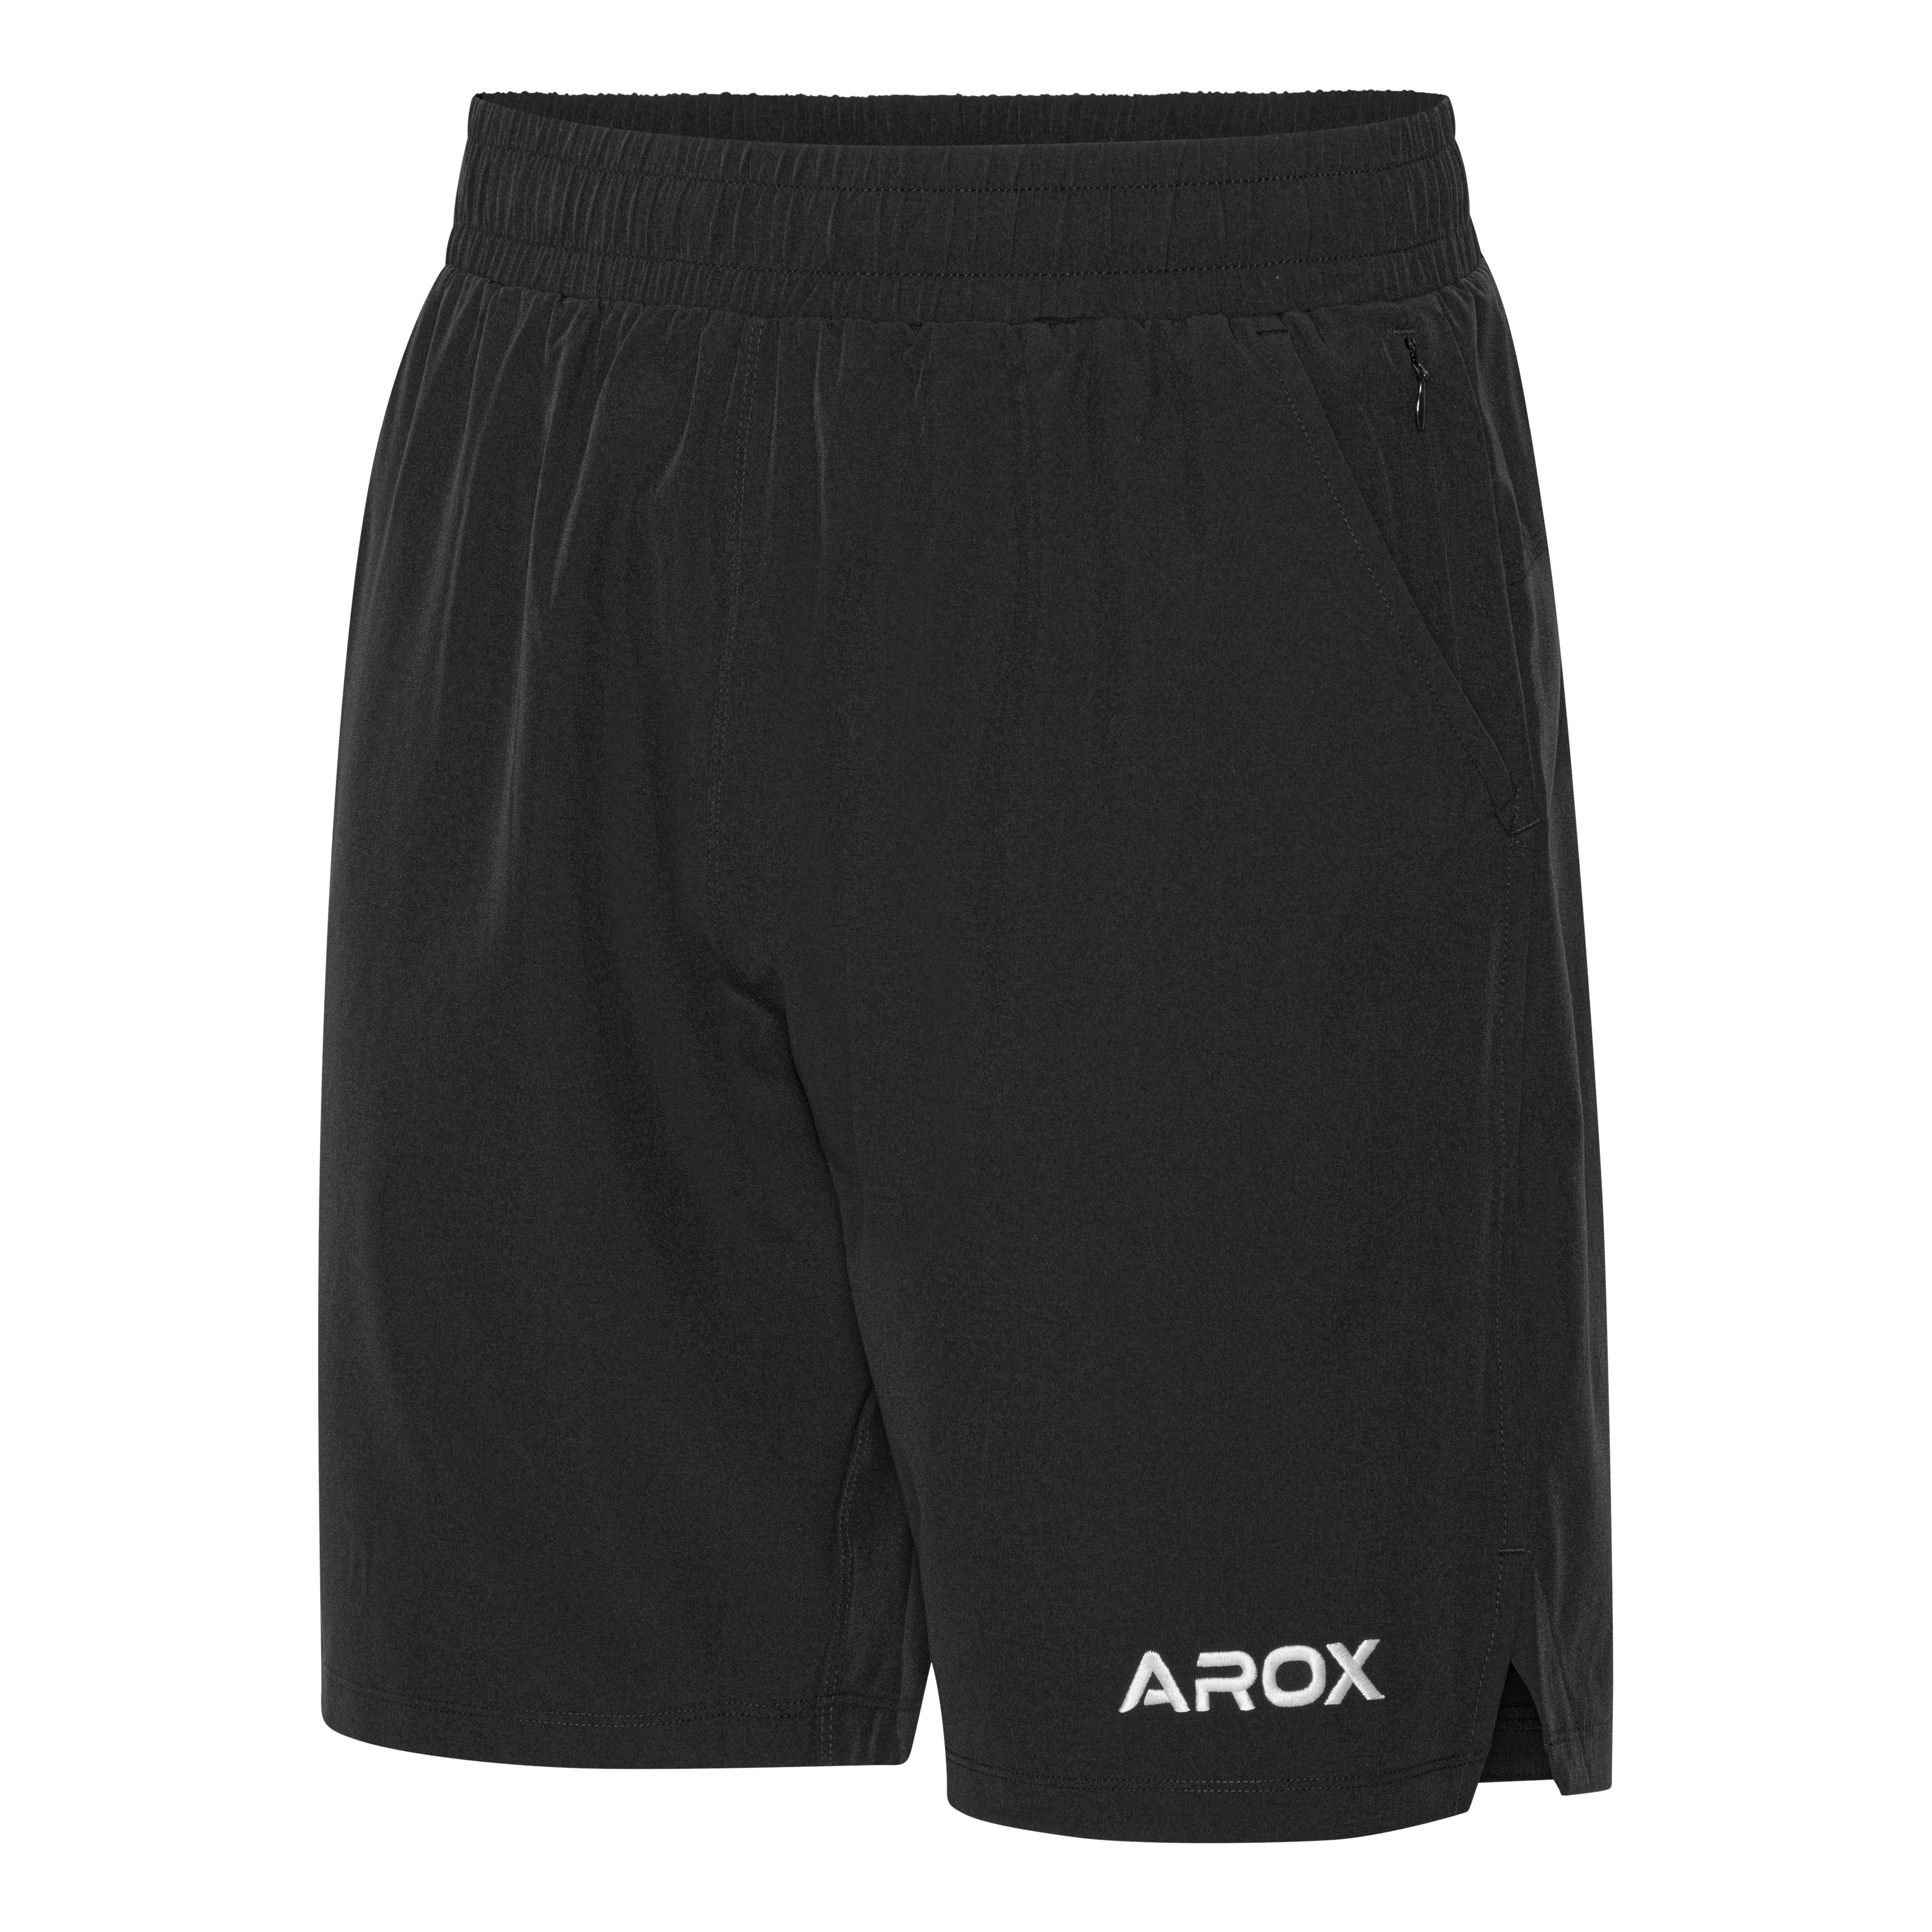 Arox - Dri tech performance shorts